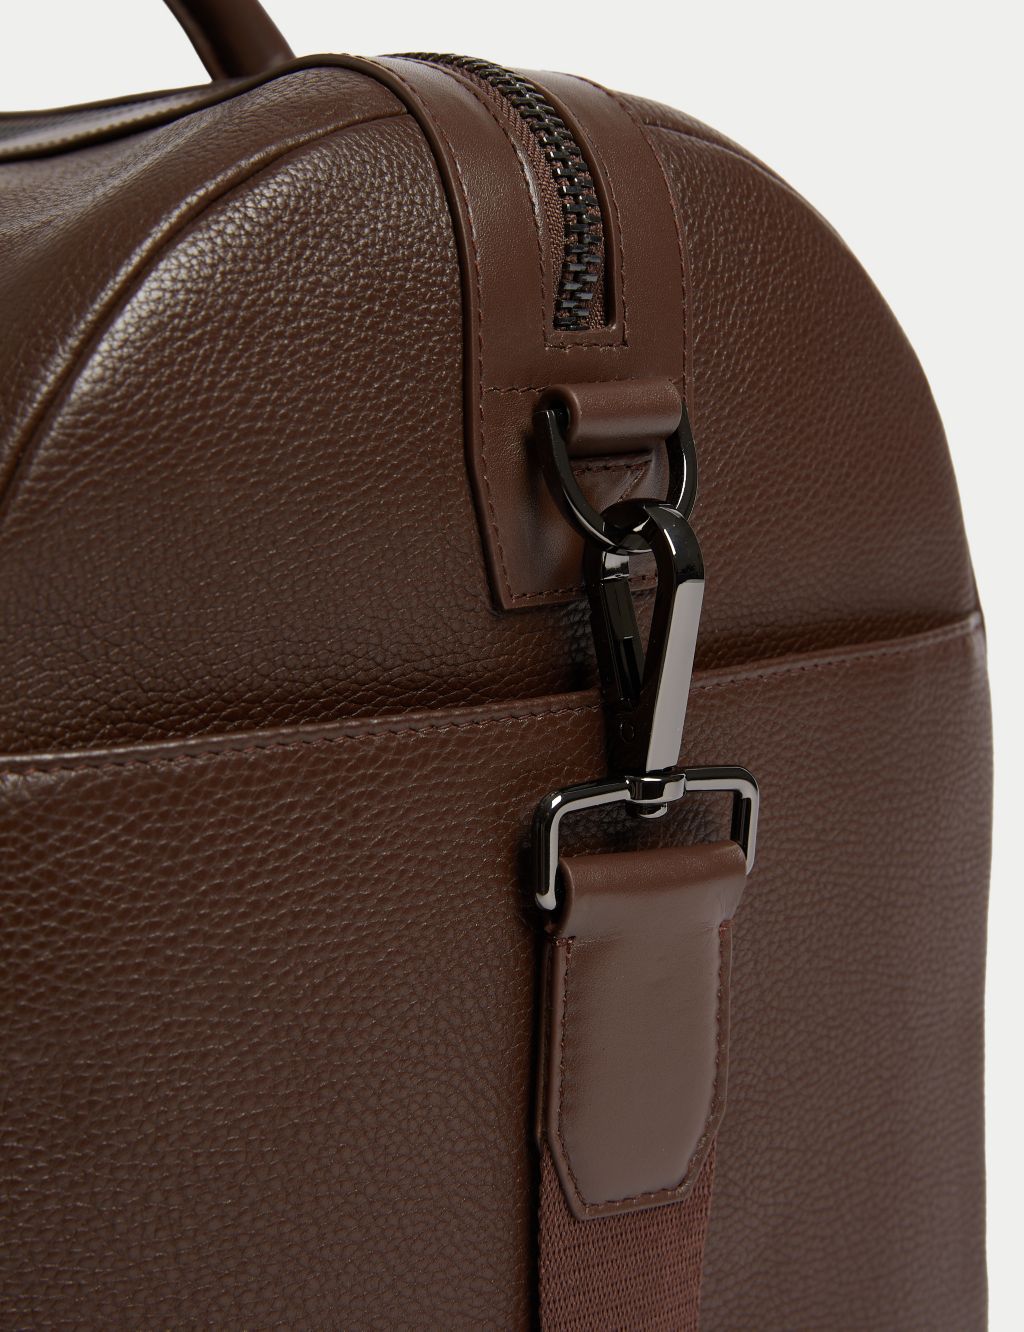 Leather Weekend Bag image 2